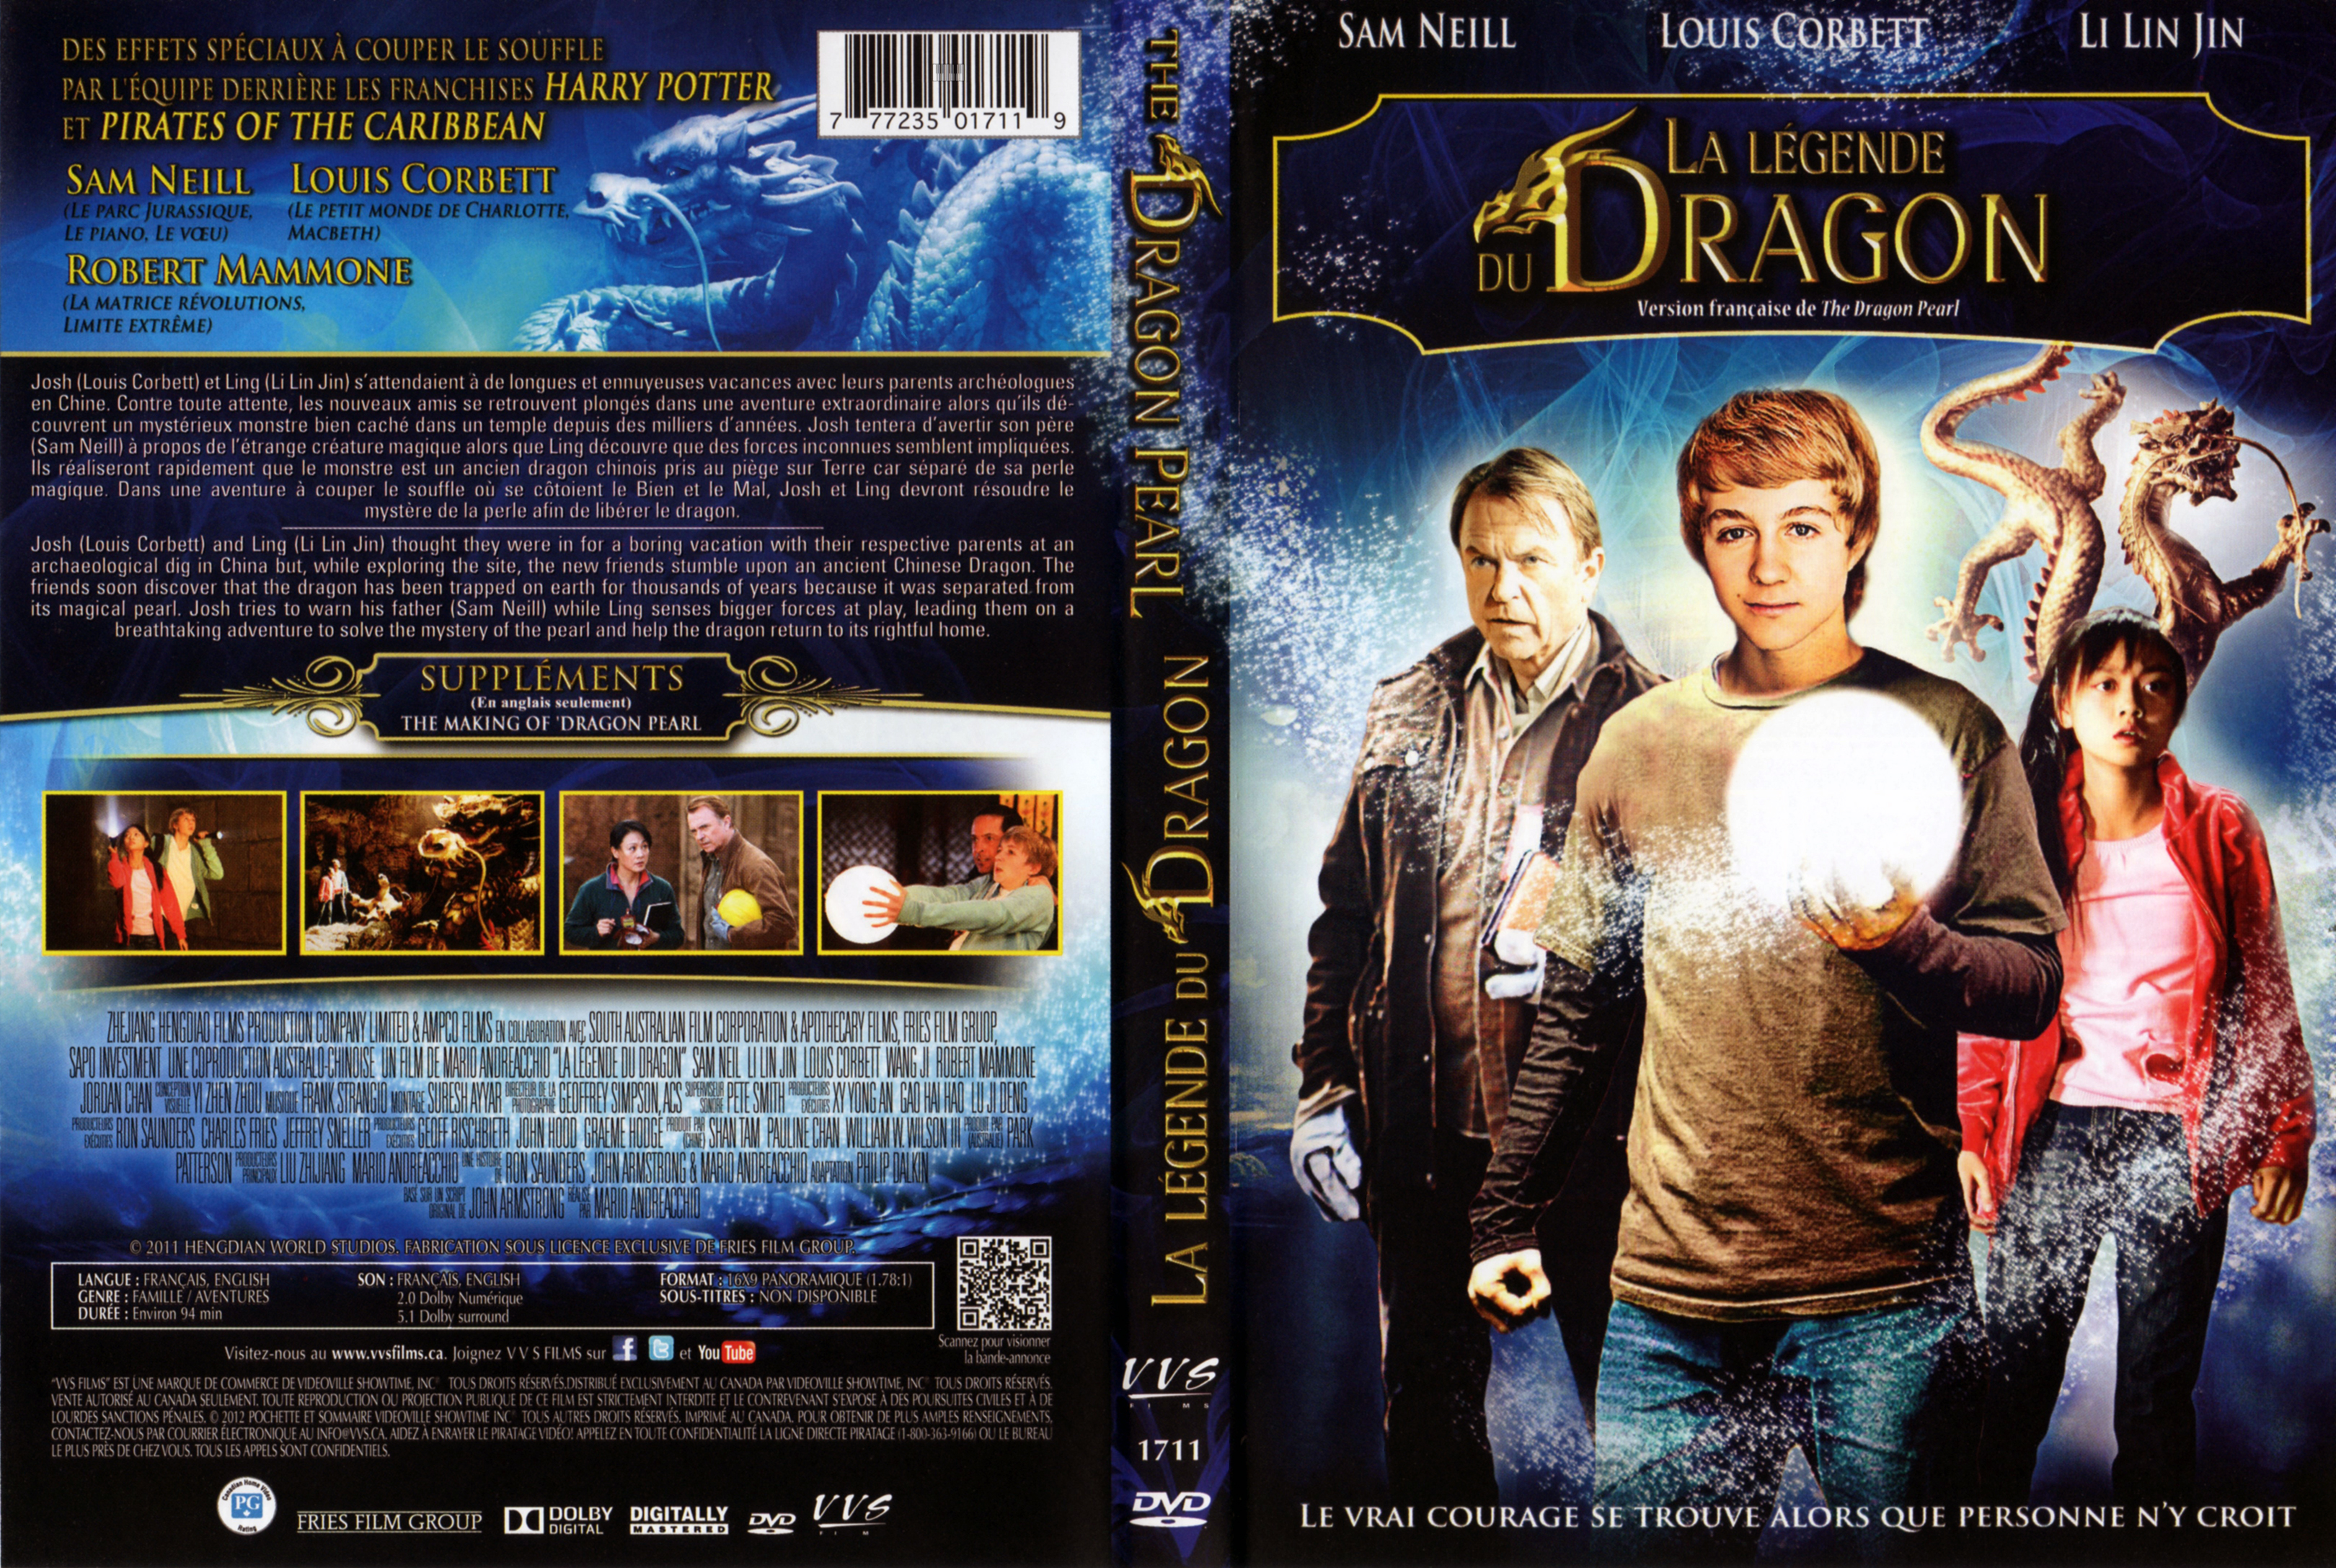 Jaquette DVD La lgende du dragon - The dragon pearl (Canadienne)